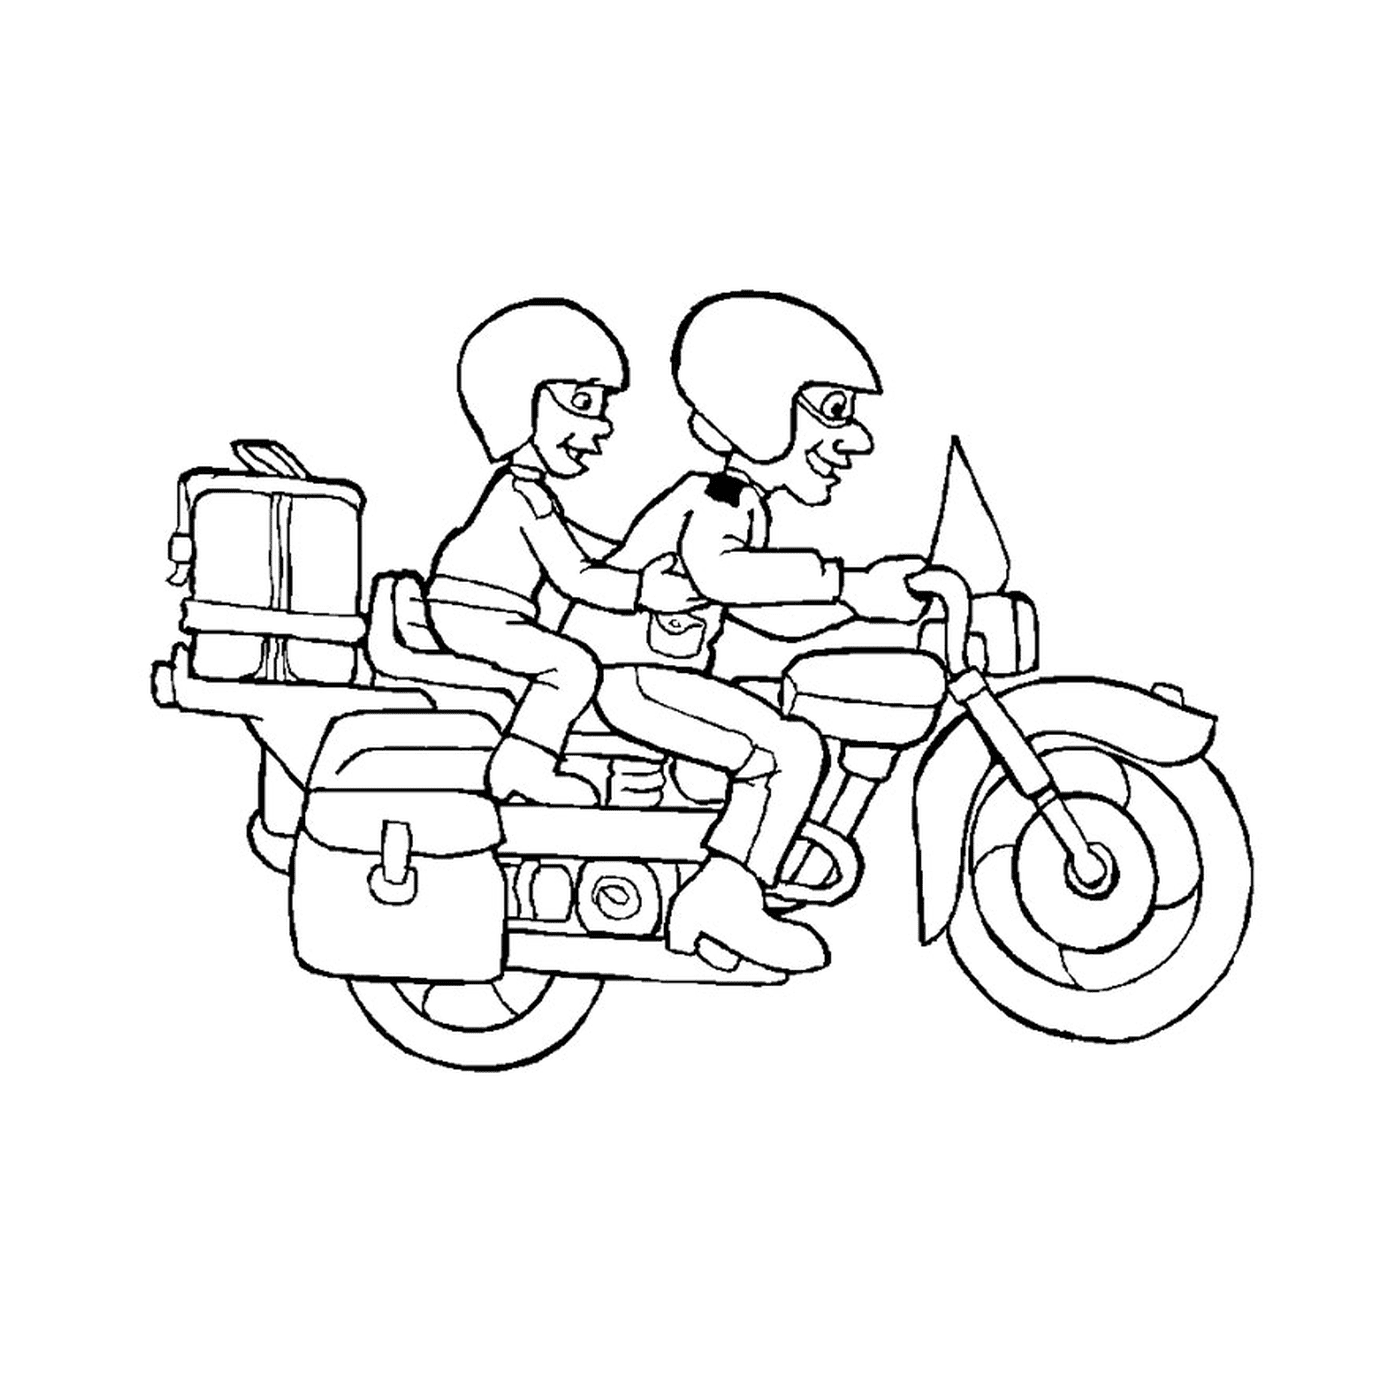  два человека на мотоциклах 